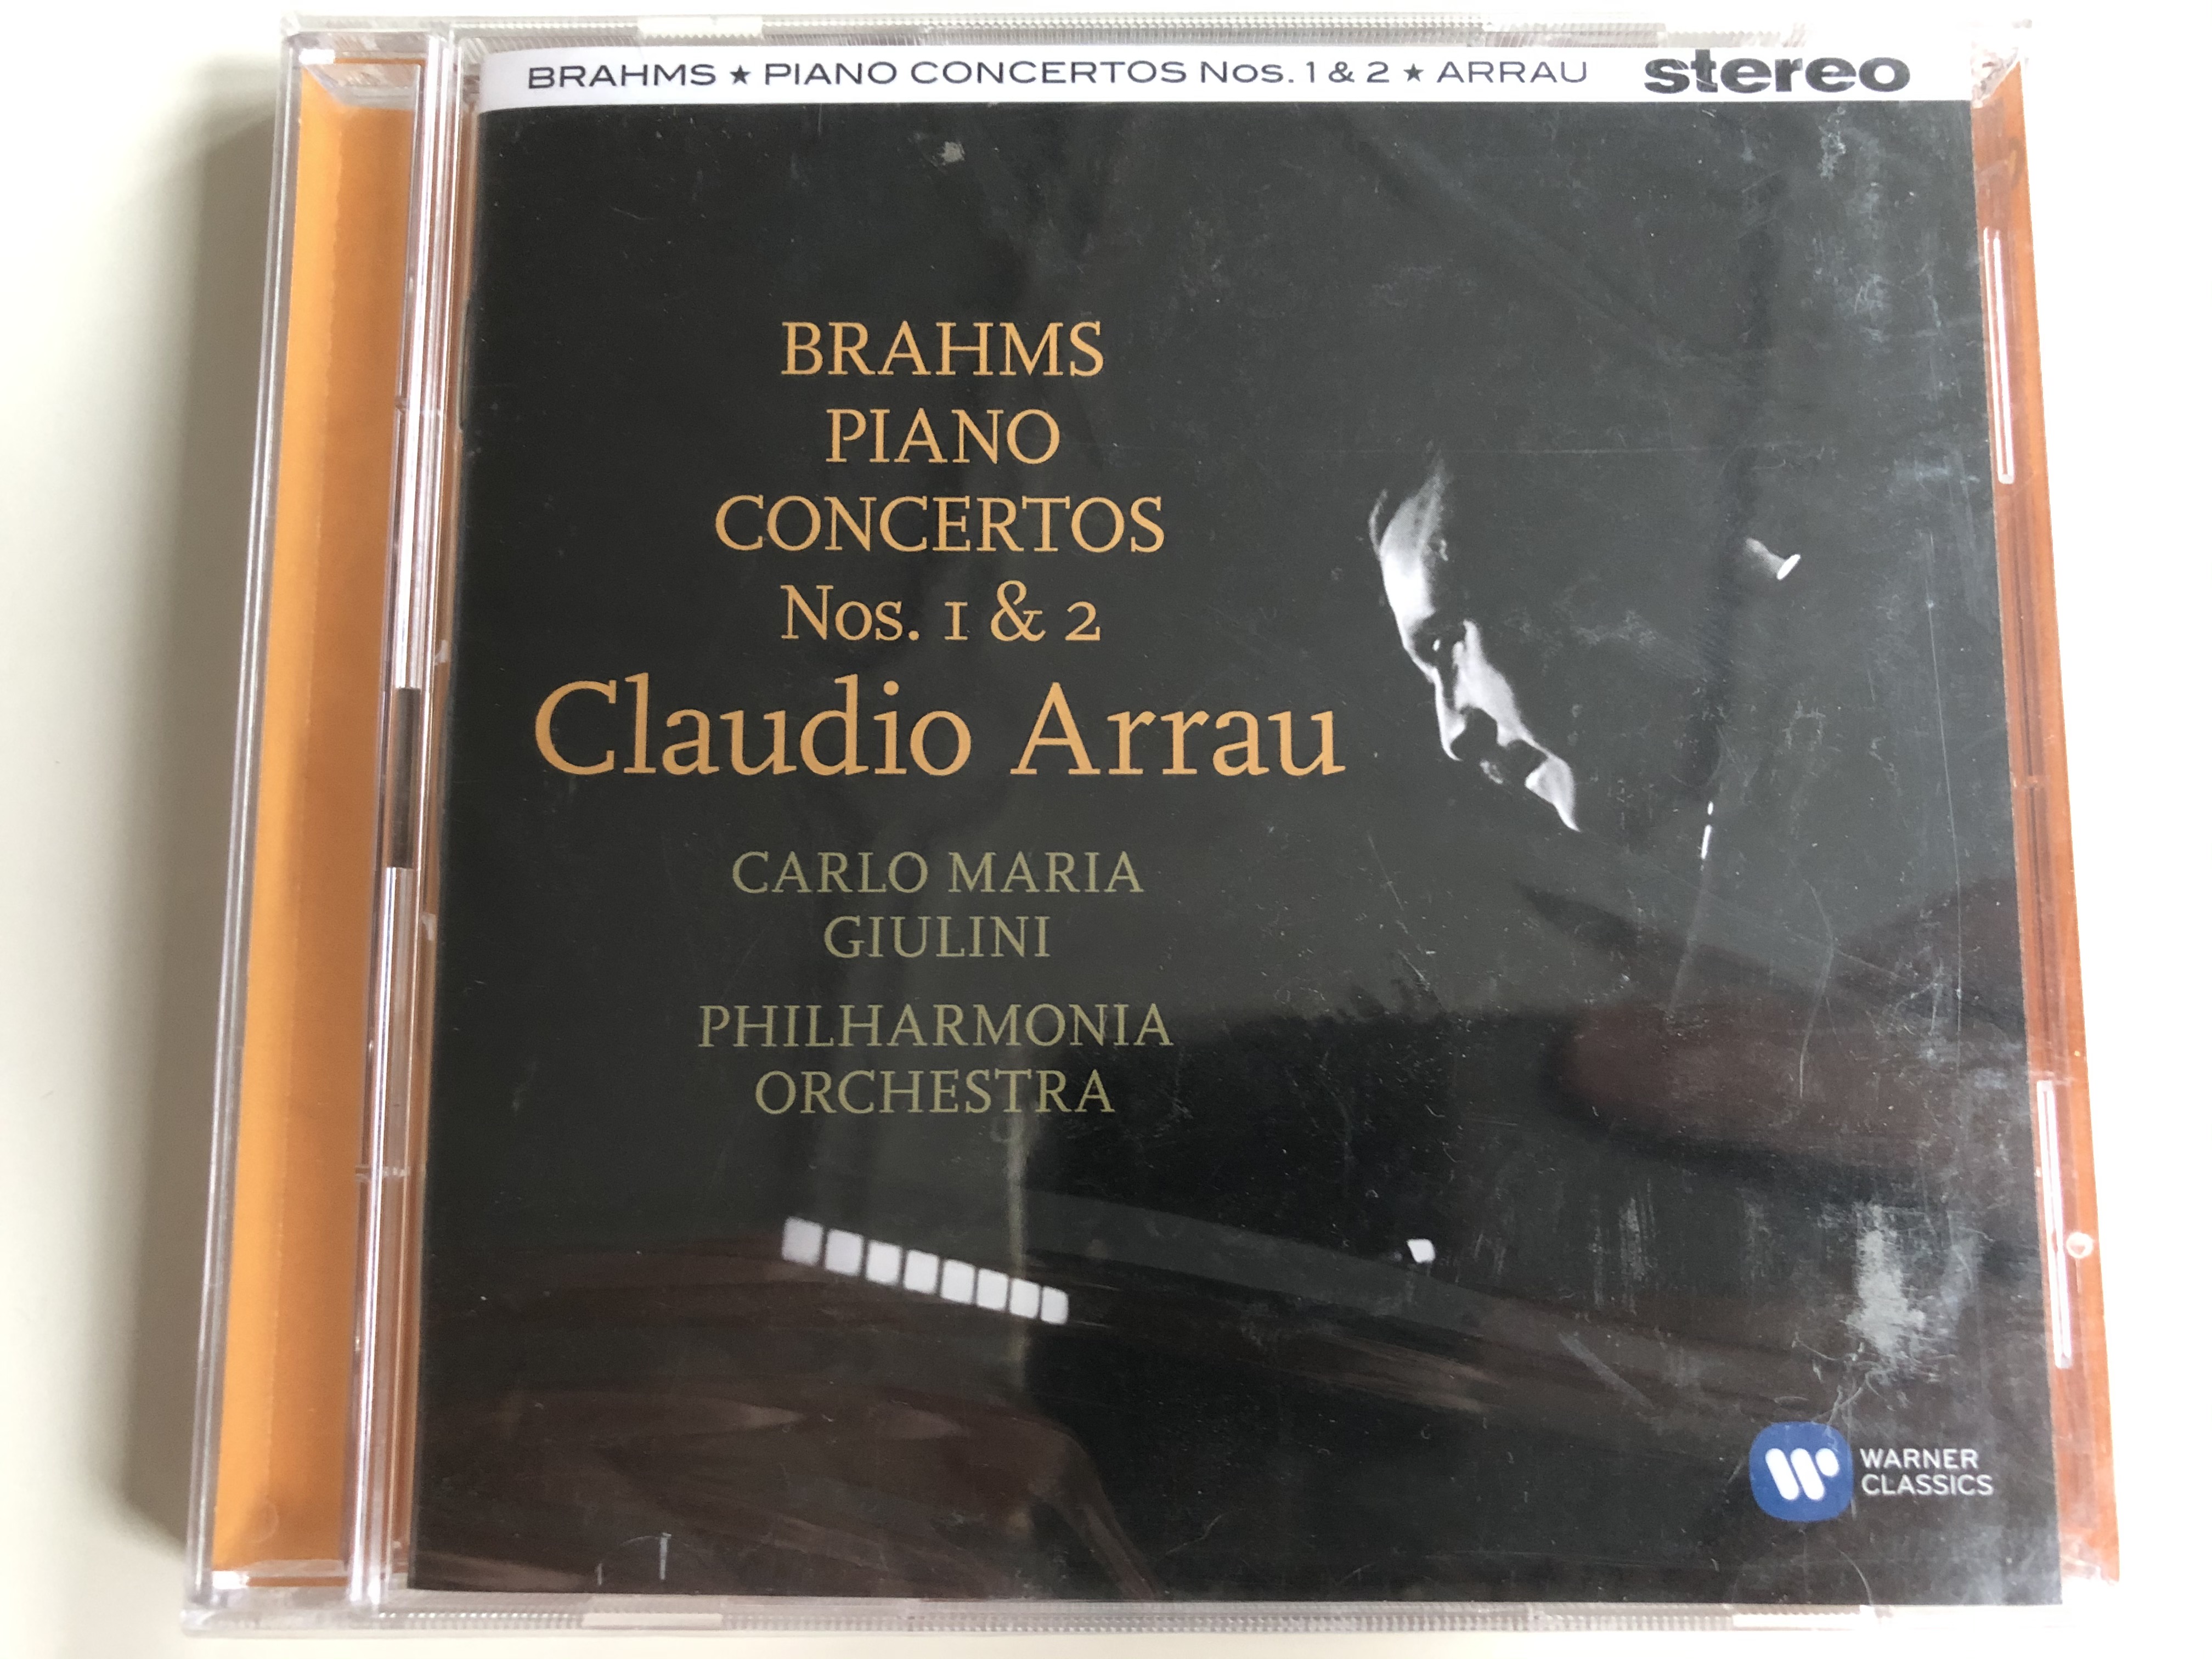 brahms-piano-concertos-nos.-1-2-claudio-arrau-carlo-maria-giulini-philharmonia-orchestra-warner-classics-2x-audio-cd-2016-stereo-0825646768110-1-.jpg